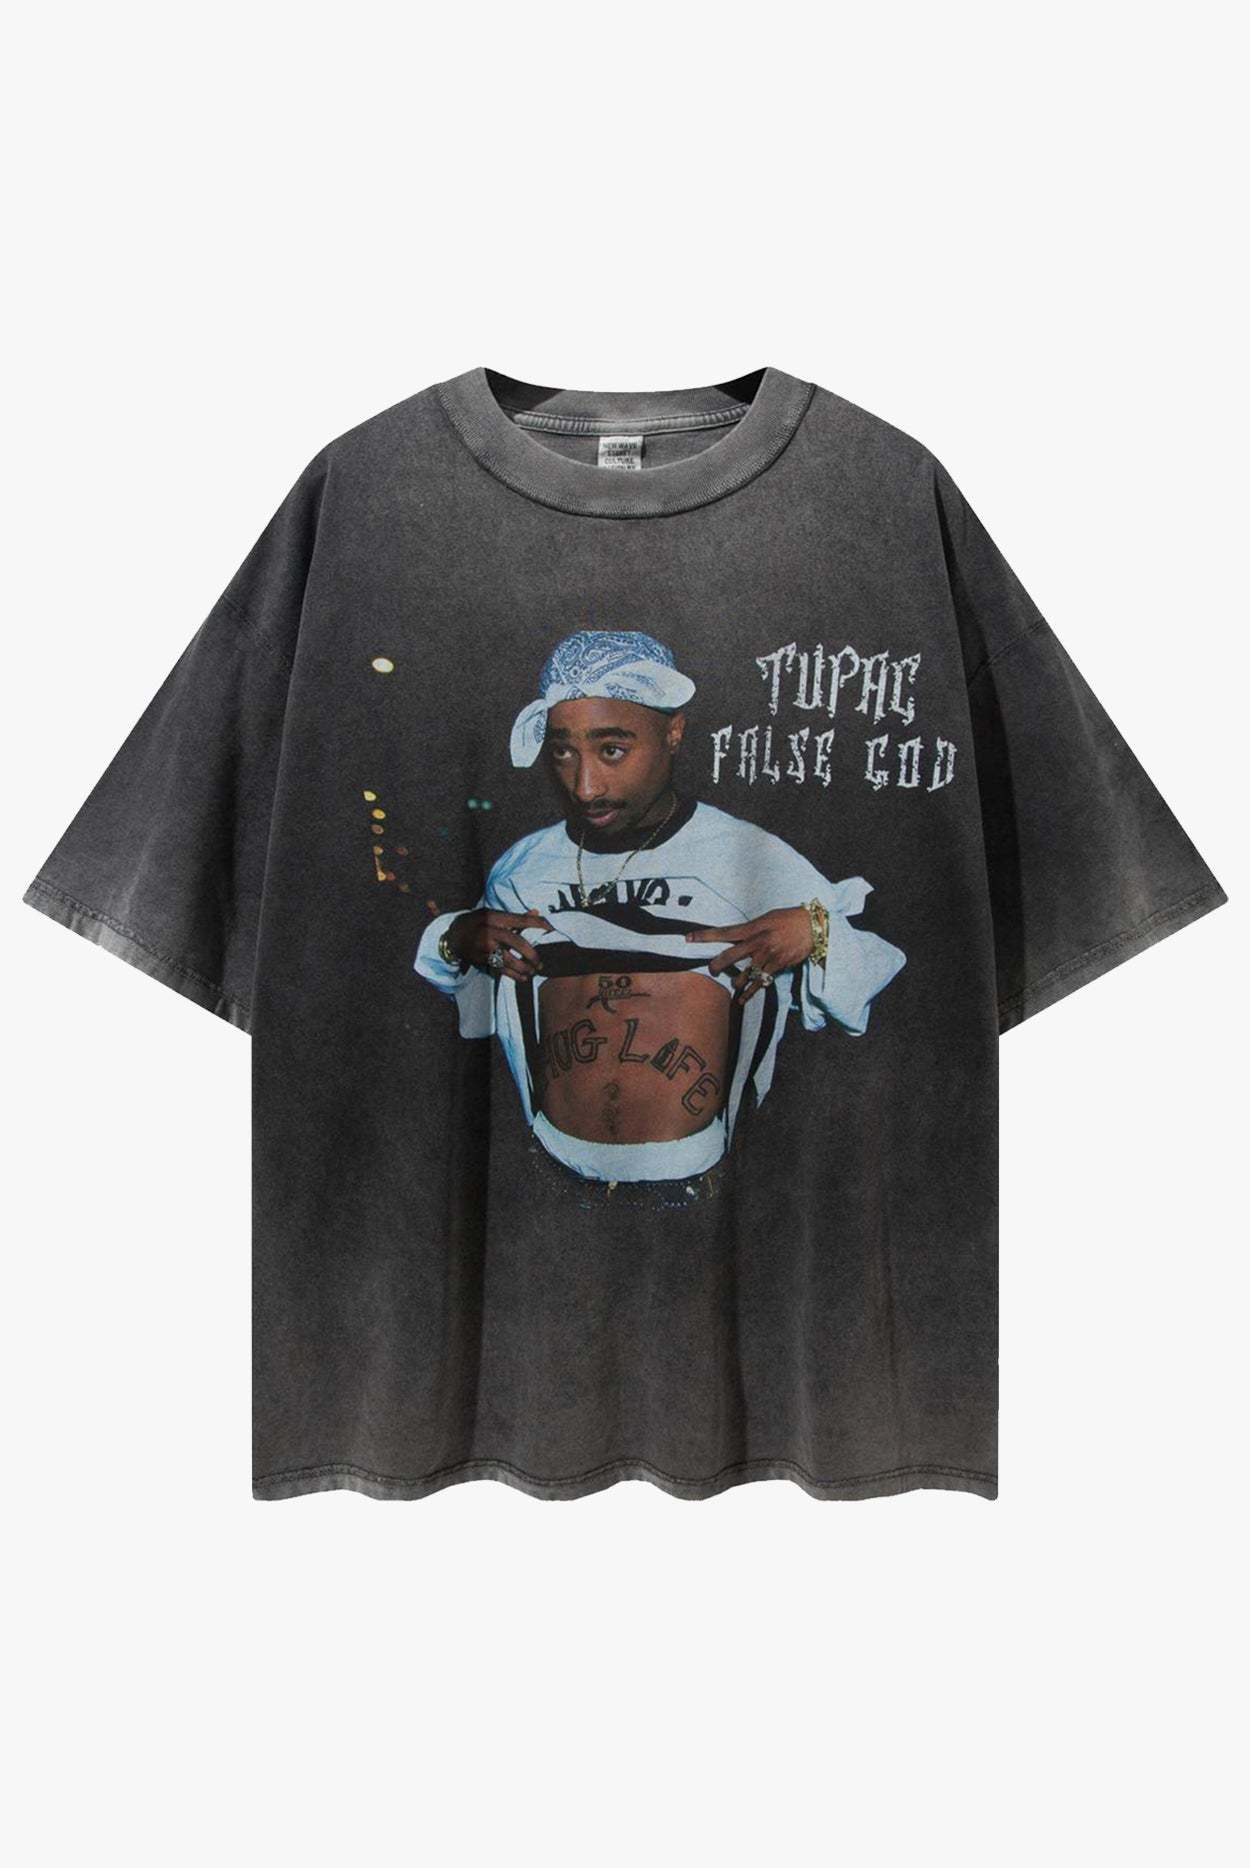 wash water retro short sleeve 2PAC rapper portrait printed hip hop T-shirt trend